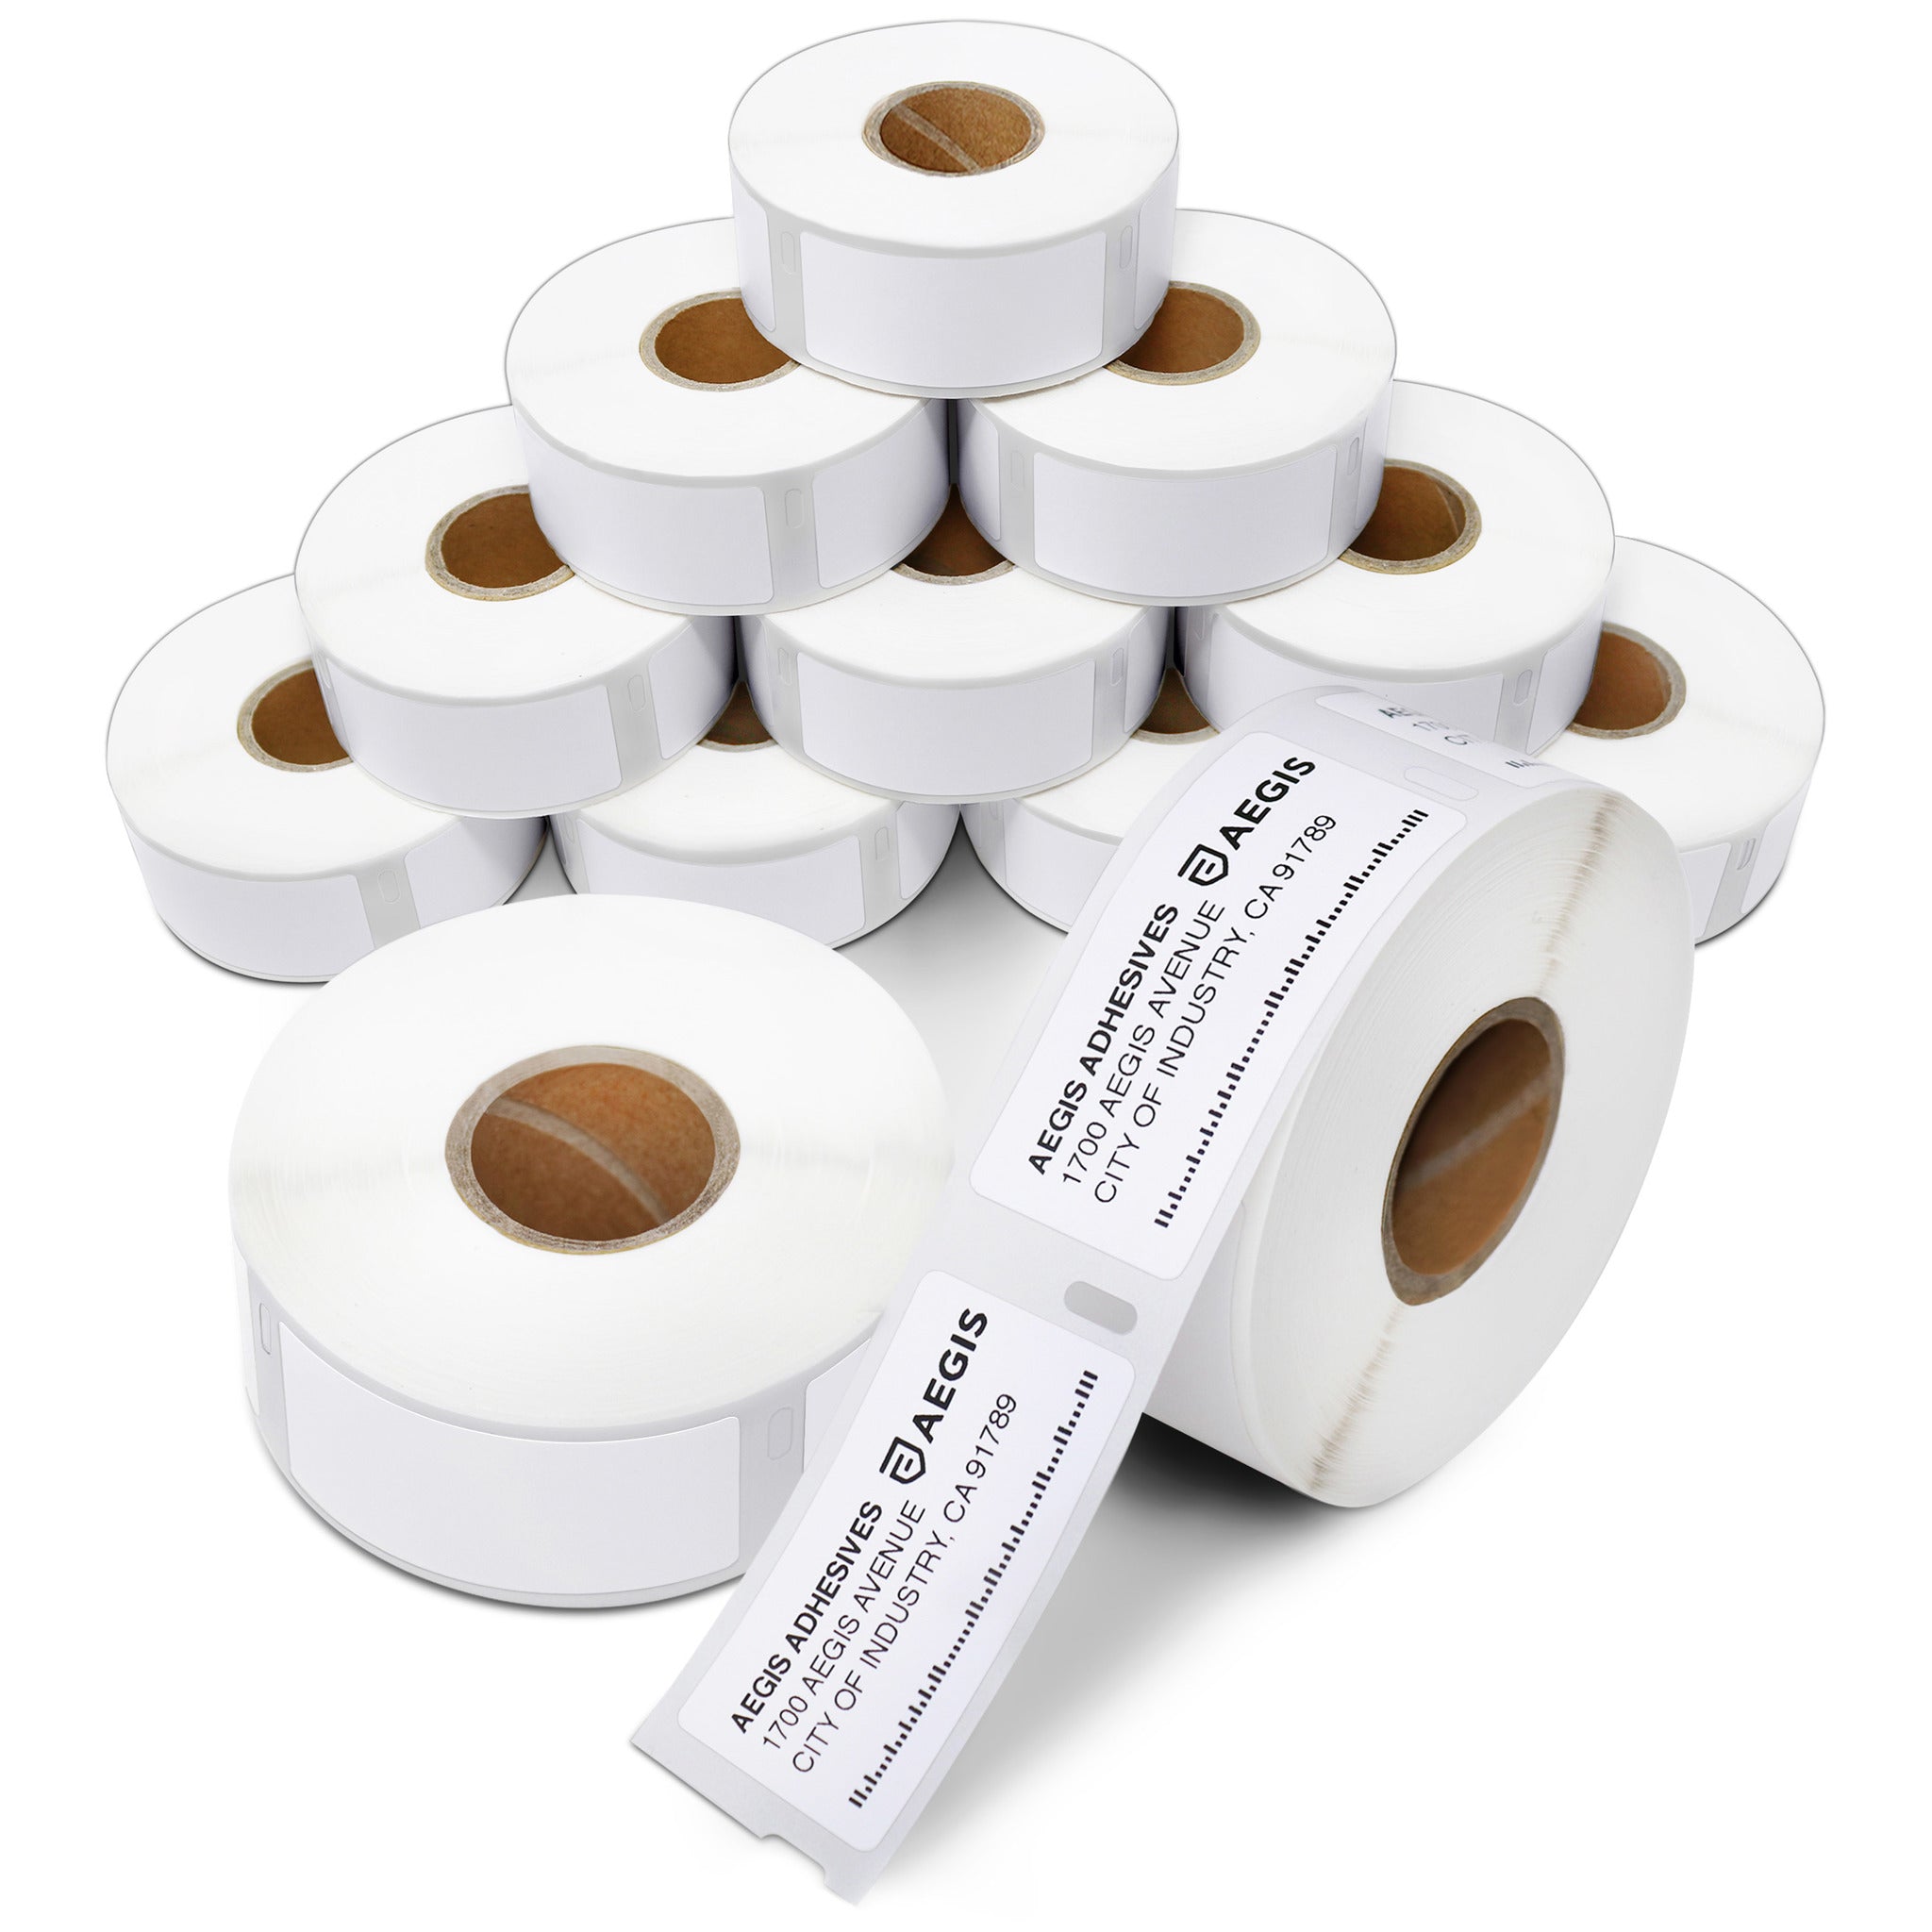 Dymo - 30336 Multipurpose Labels in Polypropylene (24 Rolls – Best Value)